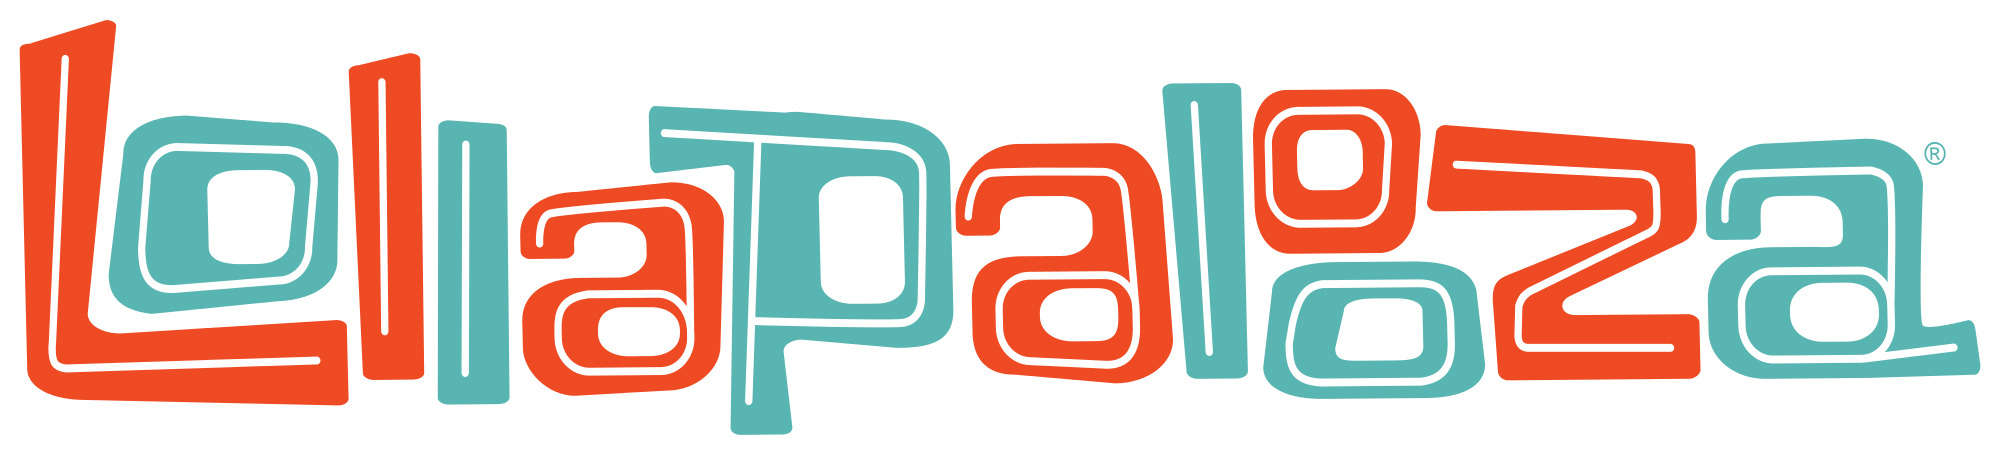 Lollapalooza Logo png icons